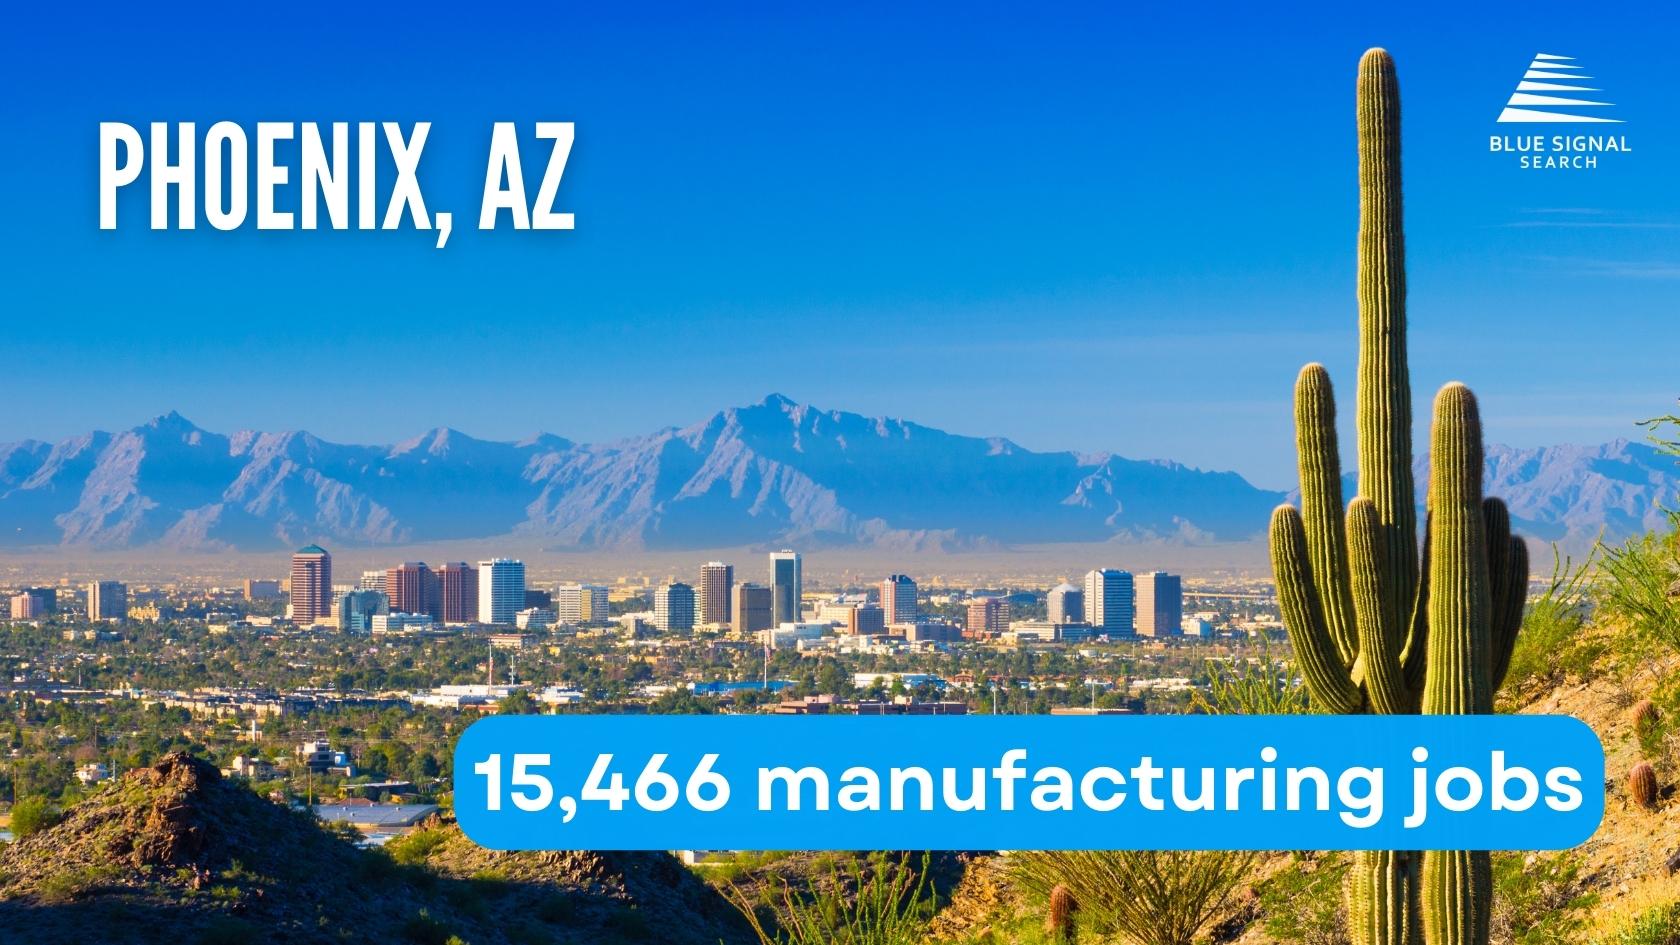 Skyline of Phoenix, AZ with key manufacturing statistics highlighted.